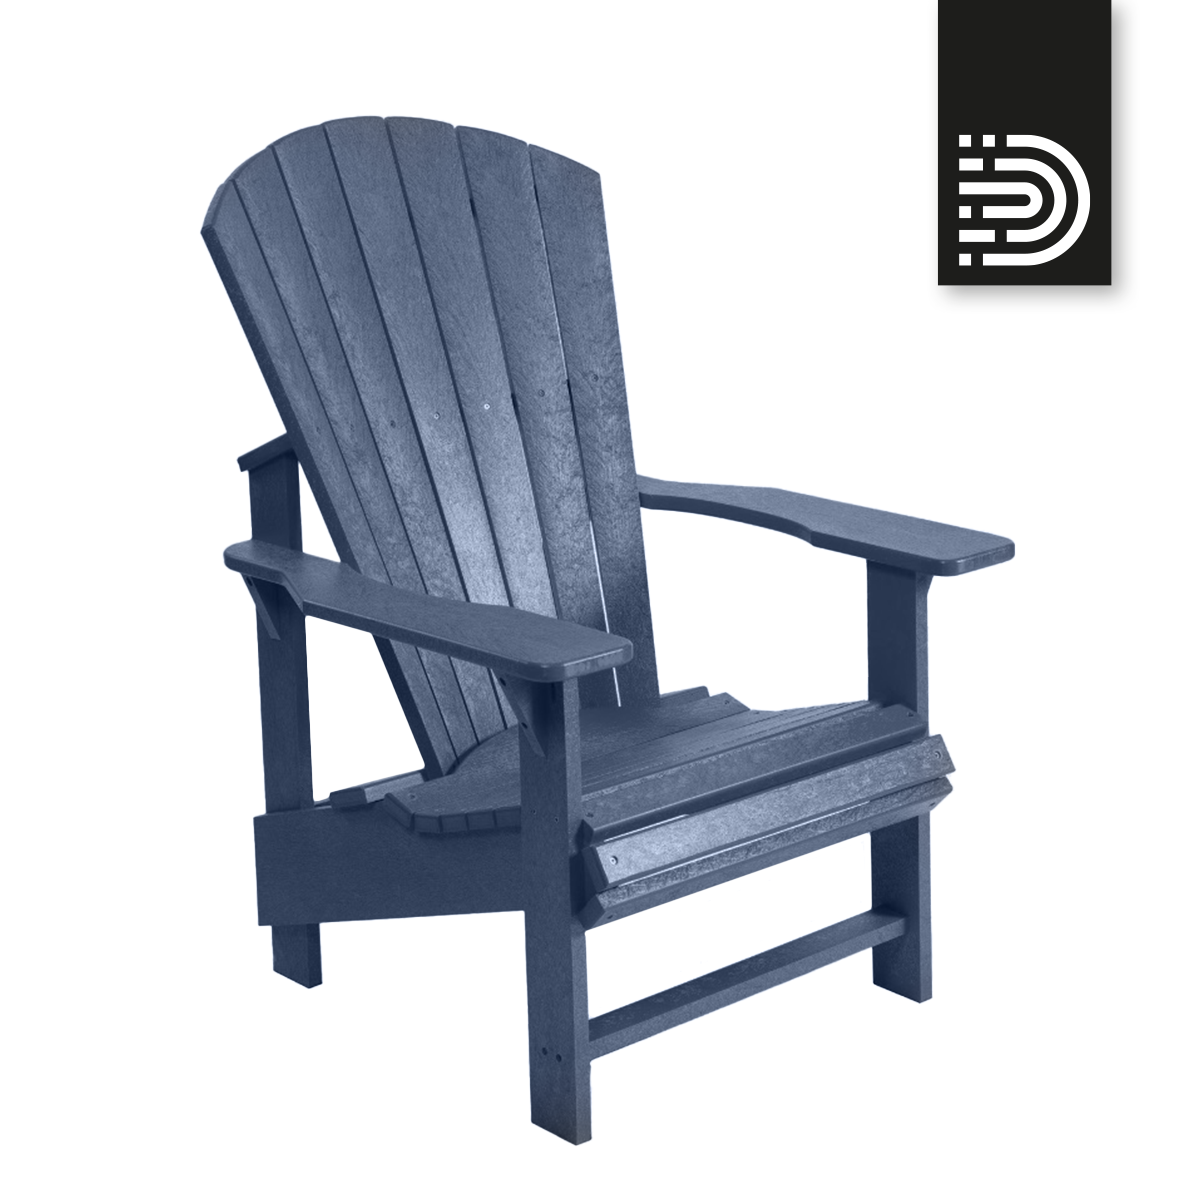 C03 Upright Adirondack Chair - navy 20